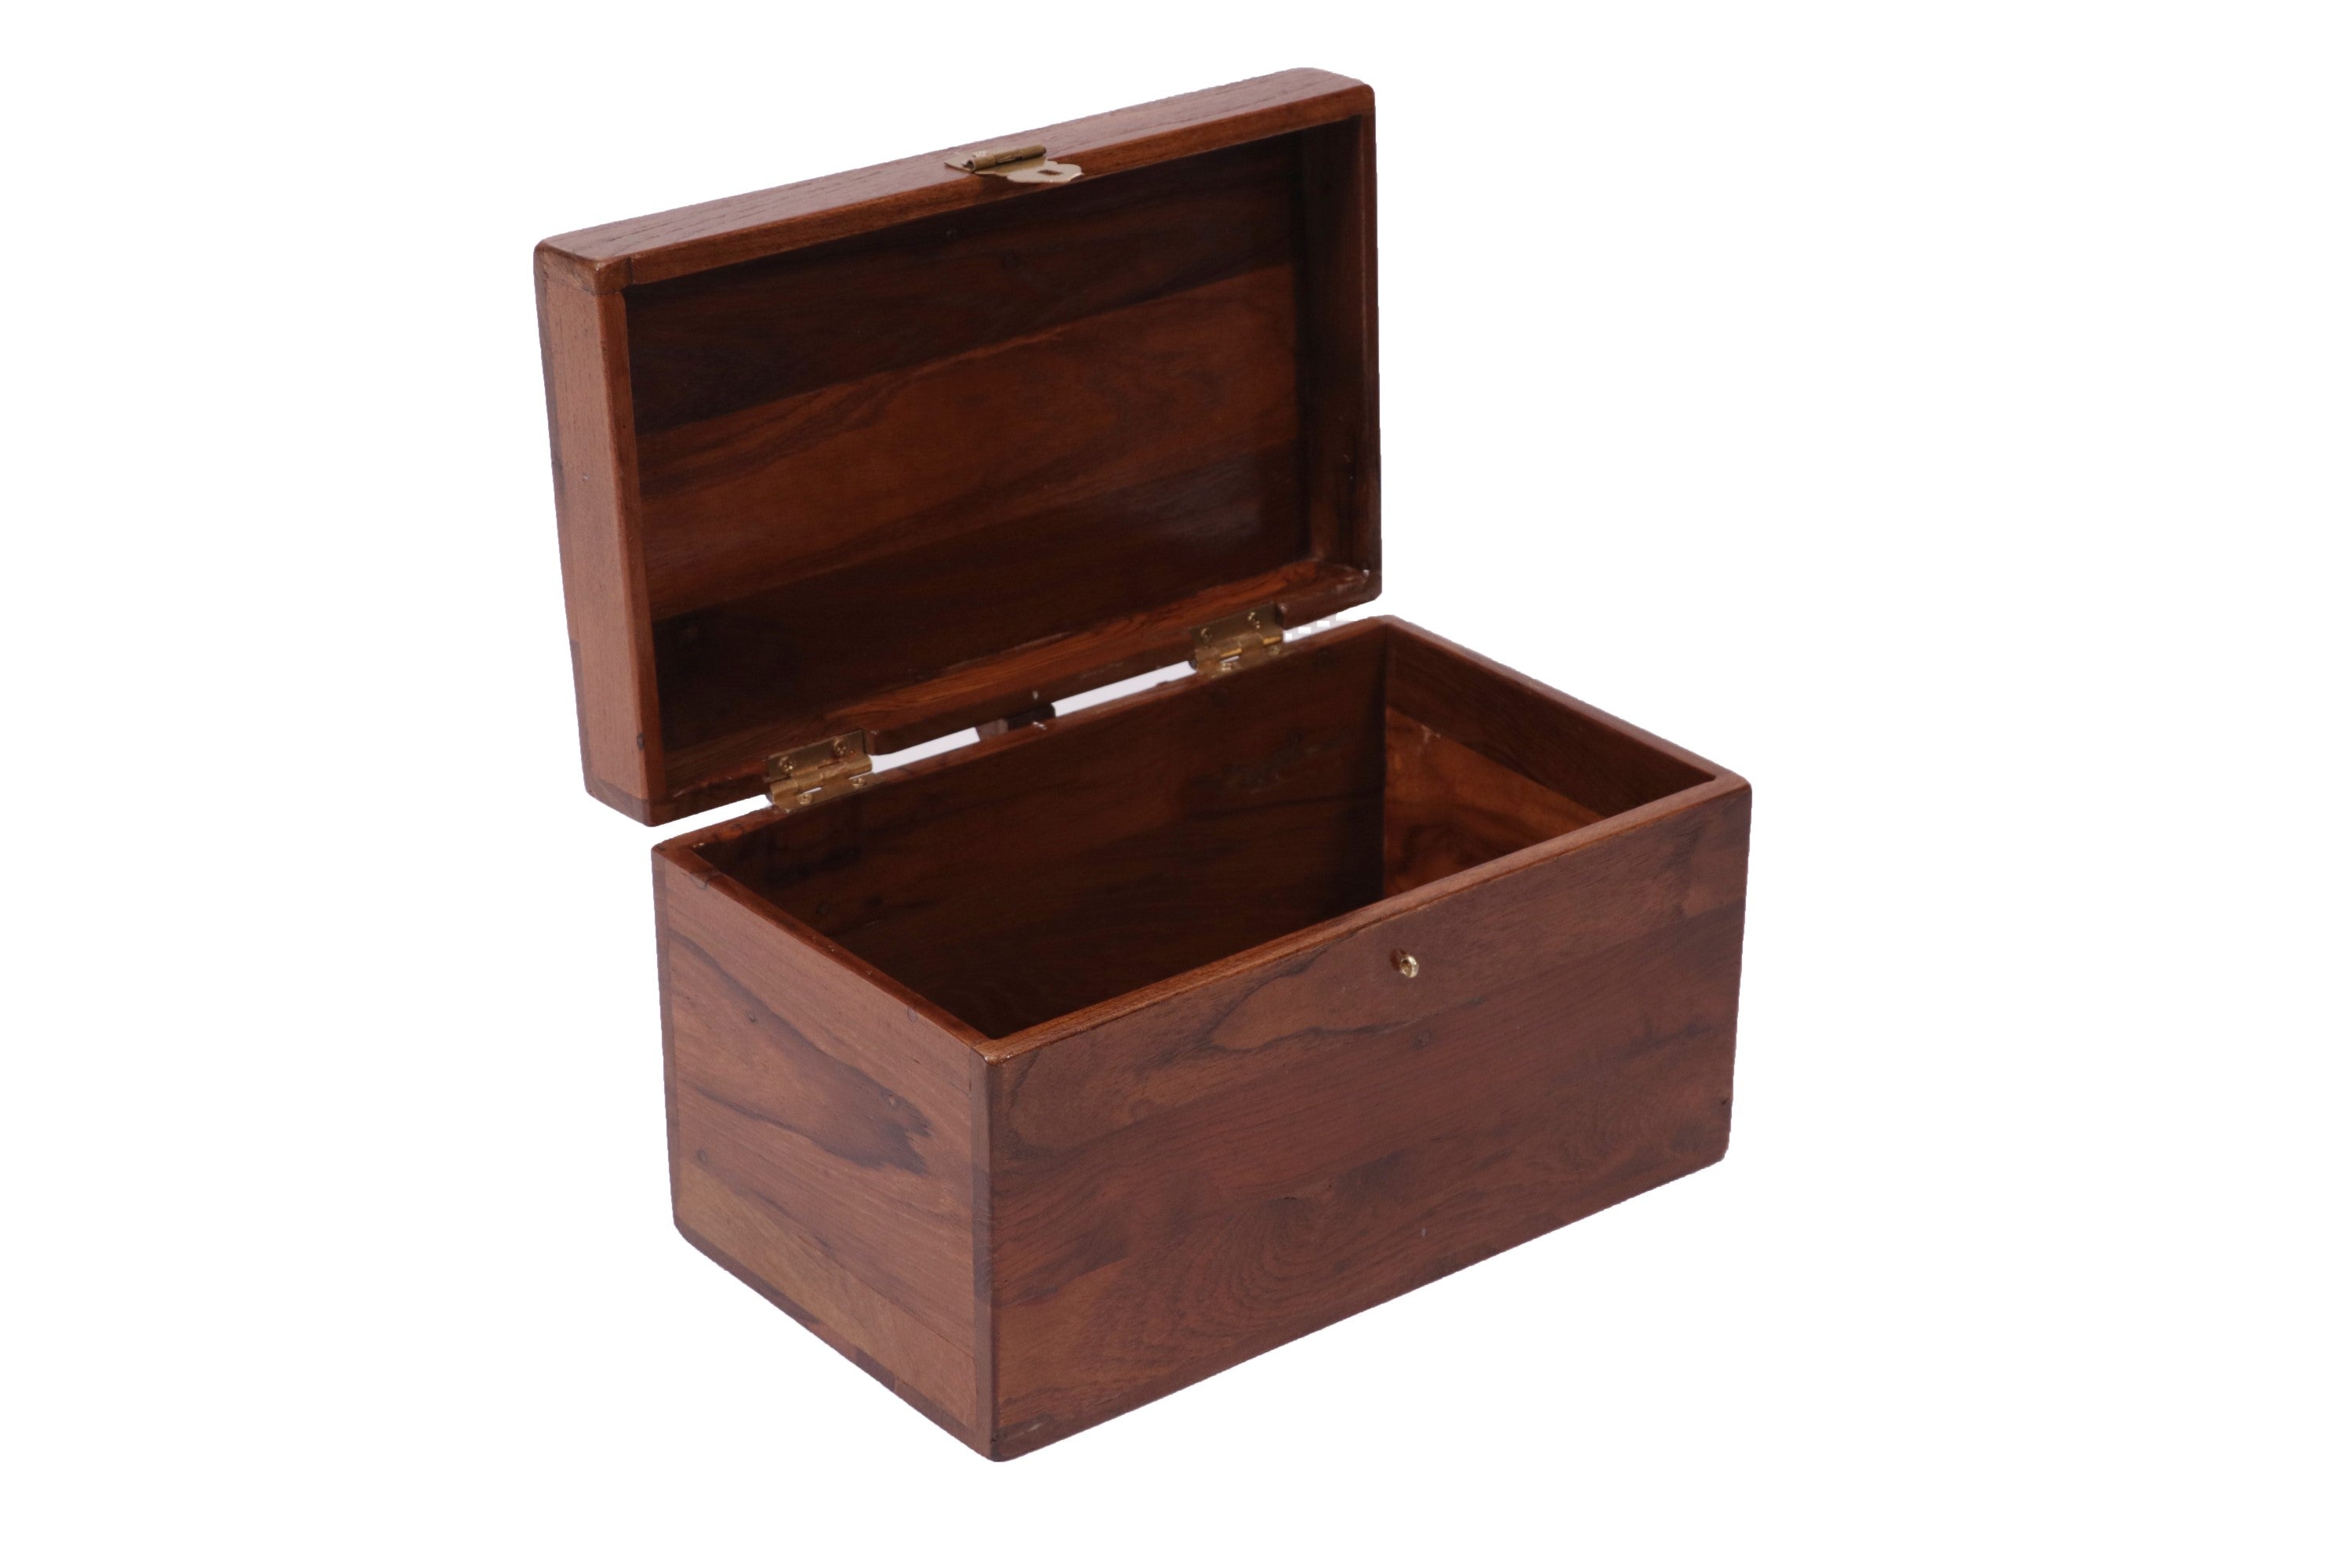 Wooden Simplistic Boxes Wooden Box